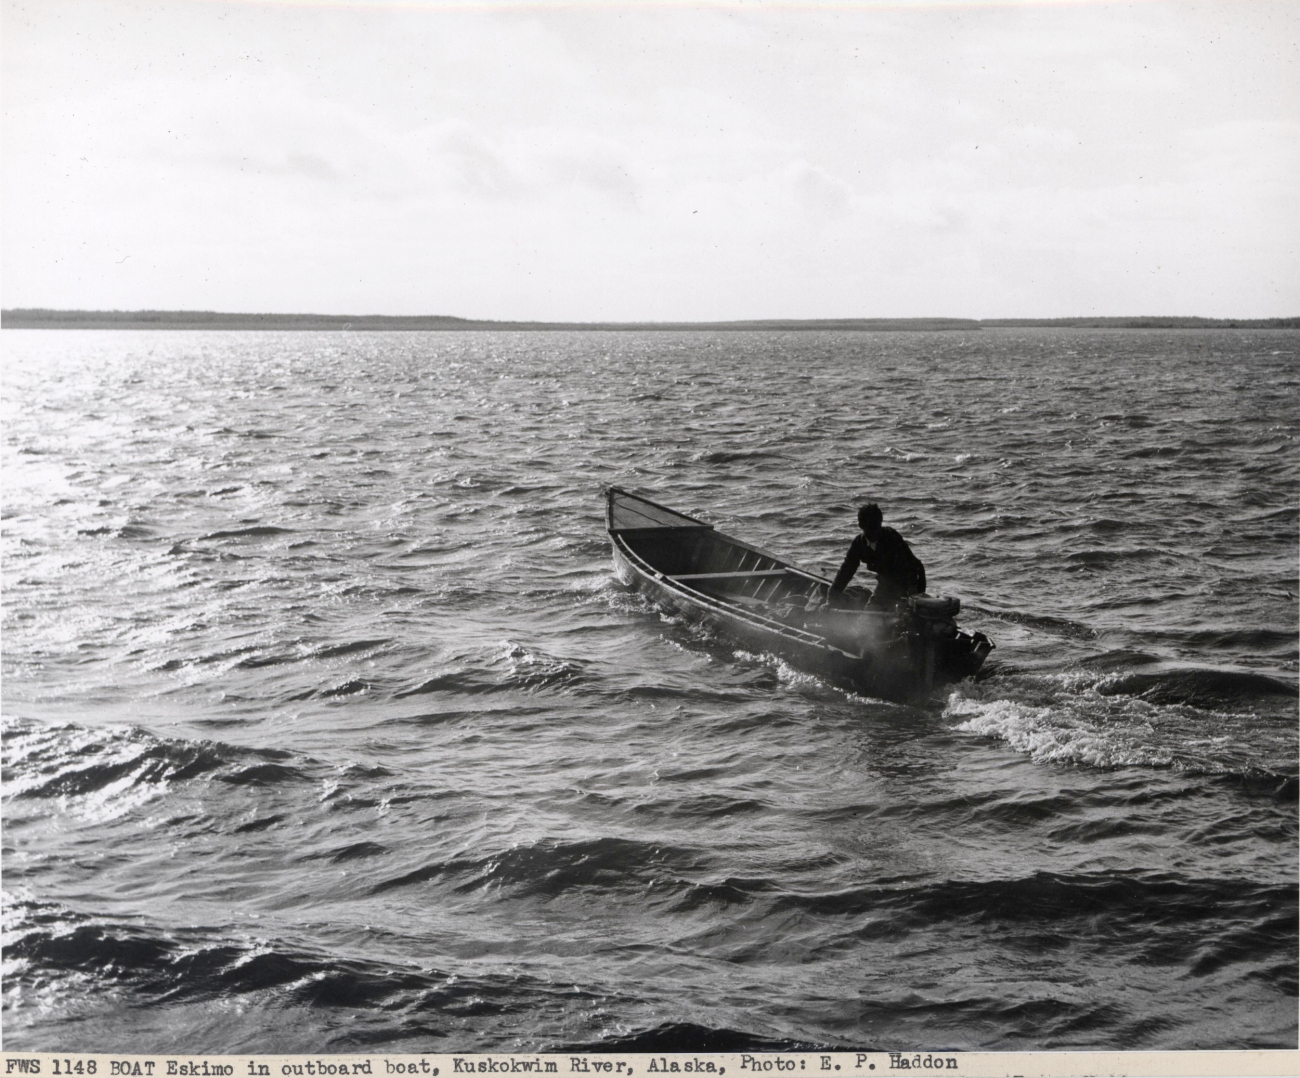 Eskimo in boat with outboard motor on Kuskokwim River